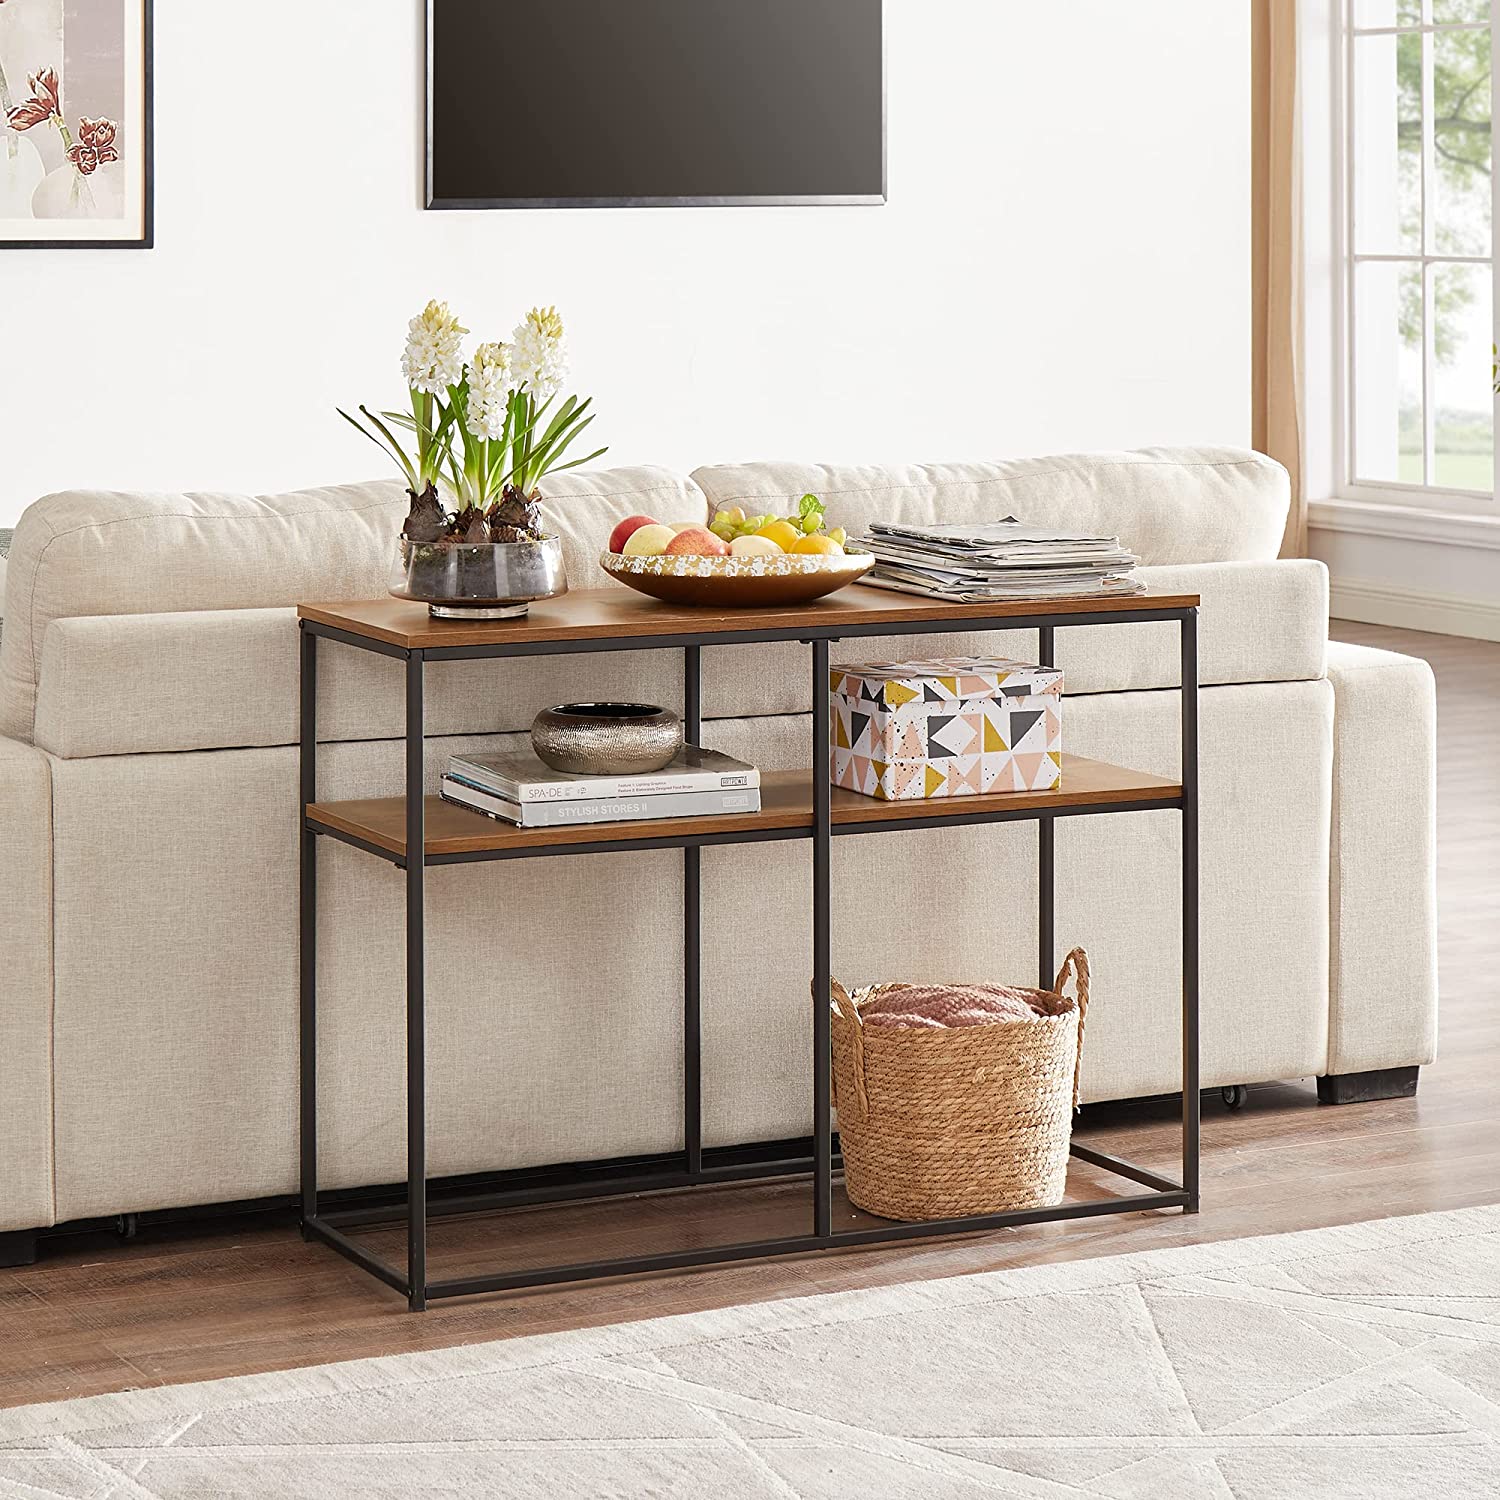 VECELO Multipurpose Console, Narrow Sofa 2-Tier Rustic Hallway Table with Storage Shelves